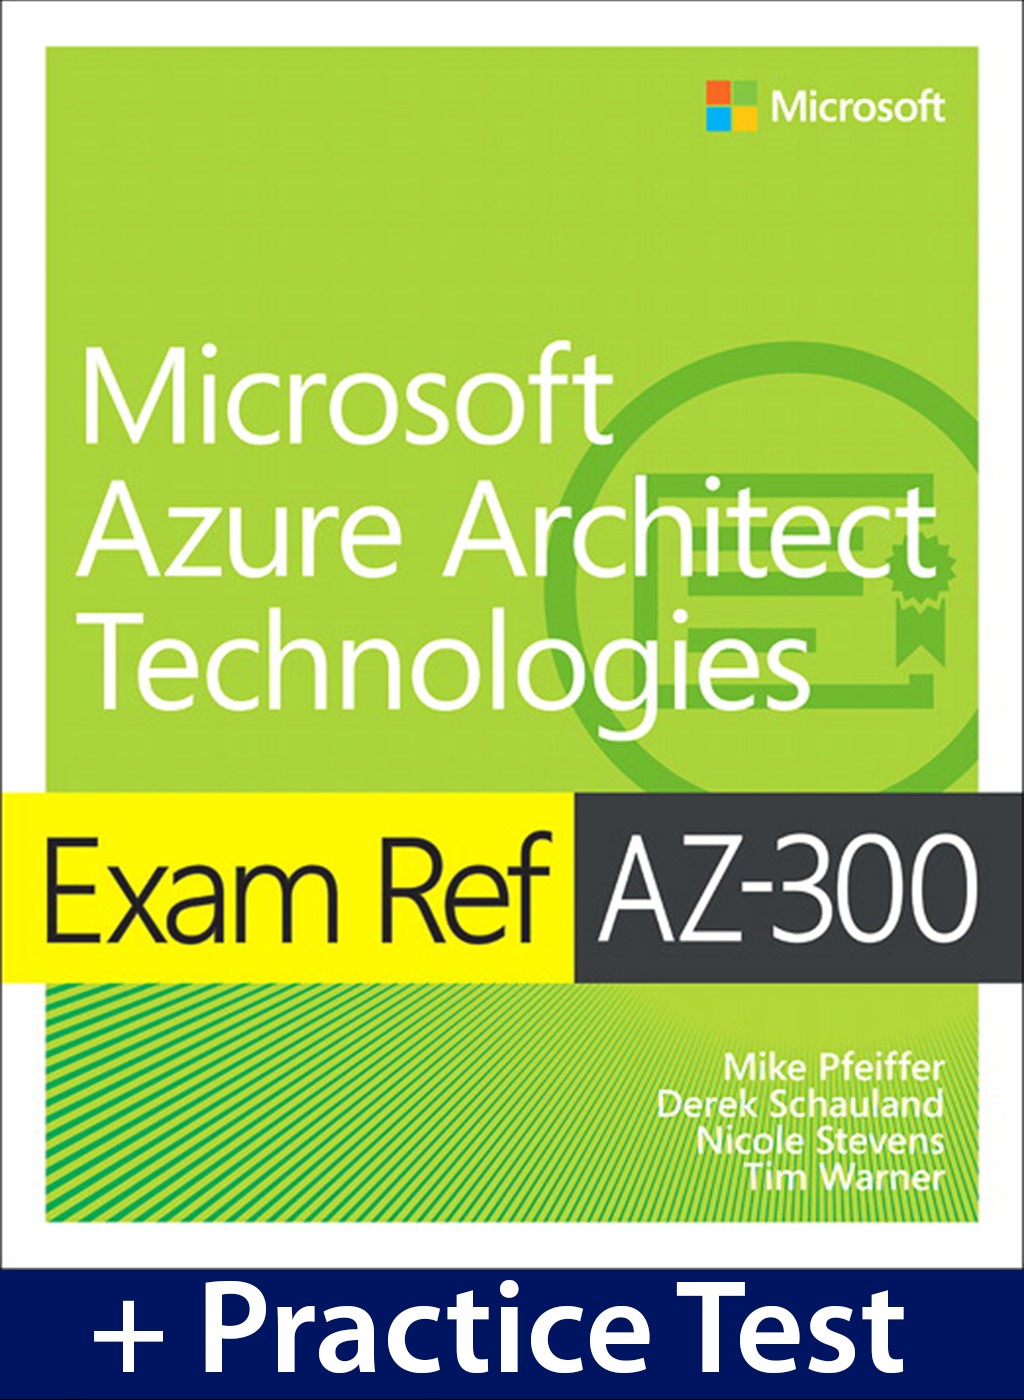 Exam Ref AZ-300 Microsoft Azure Architect Technologies with Practice Test